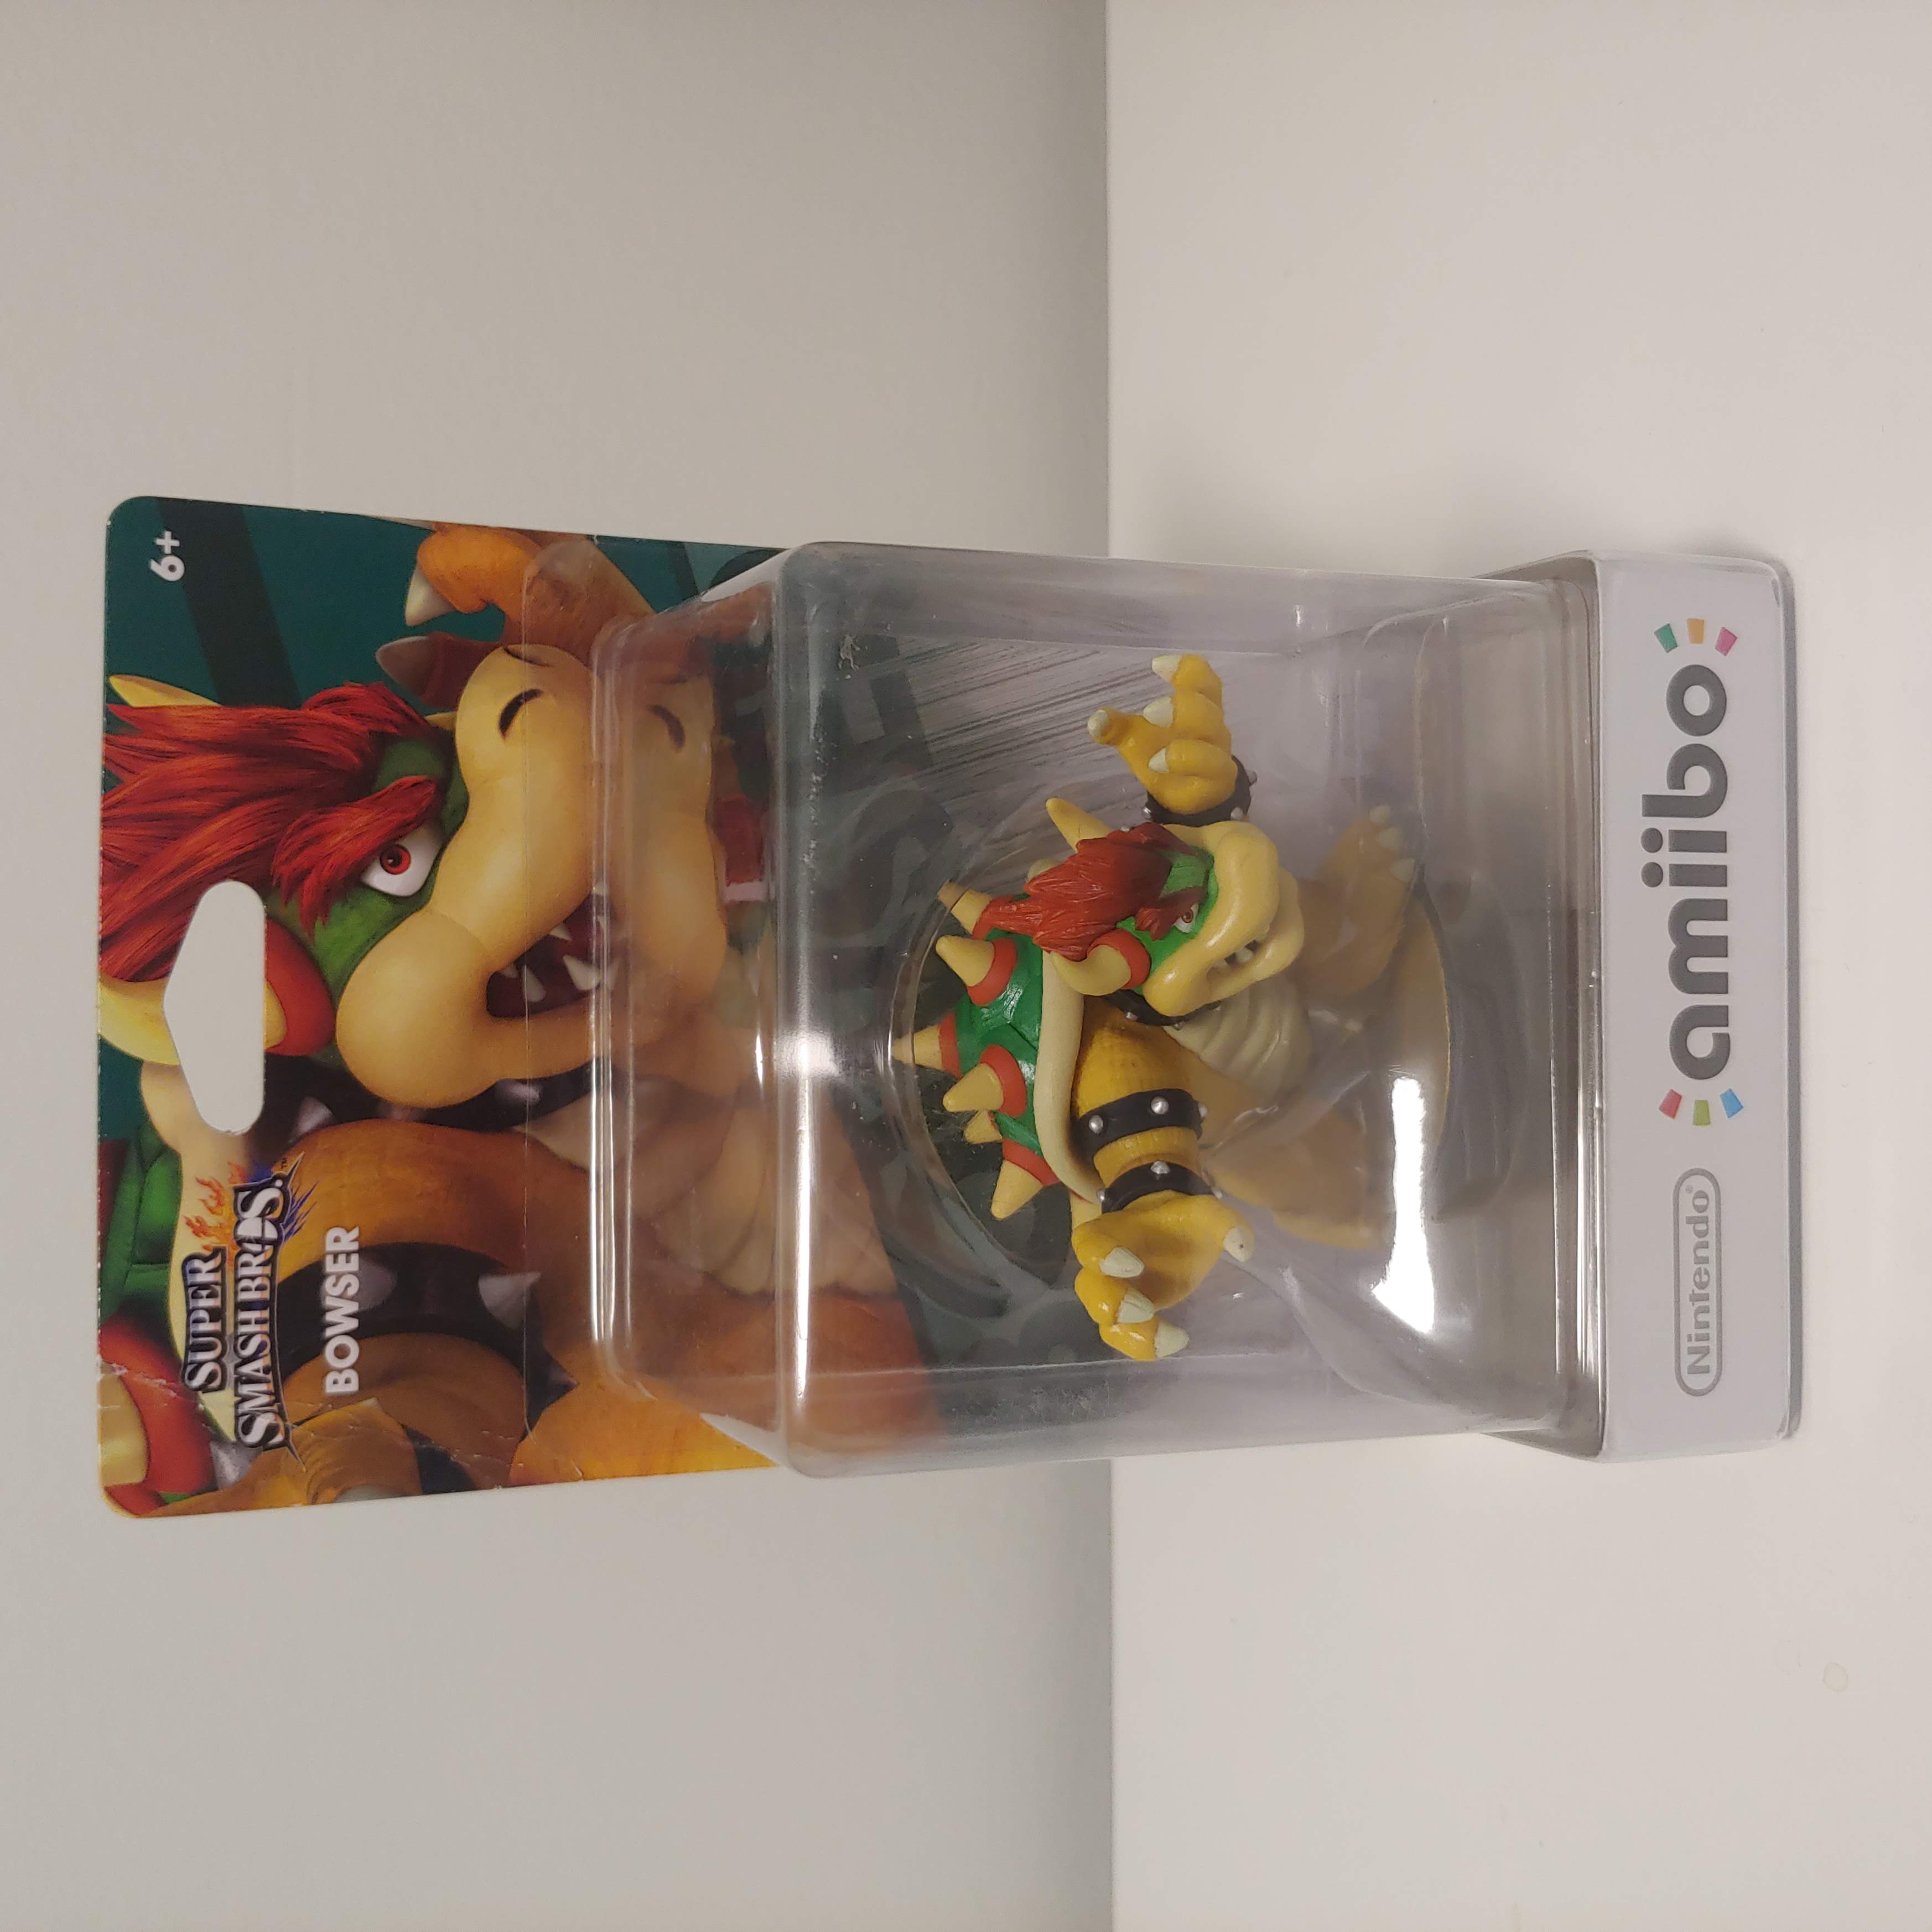 Figurine Amiibo Bowser Super Smash Bros N°20 - La Poste